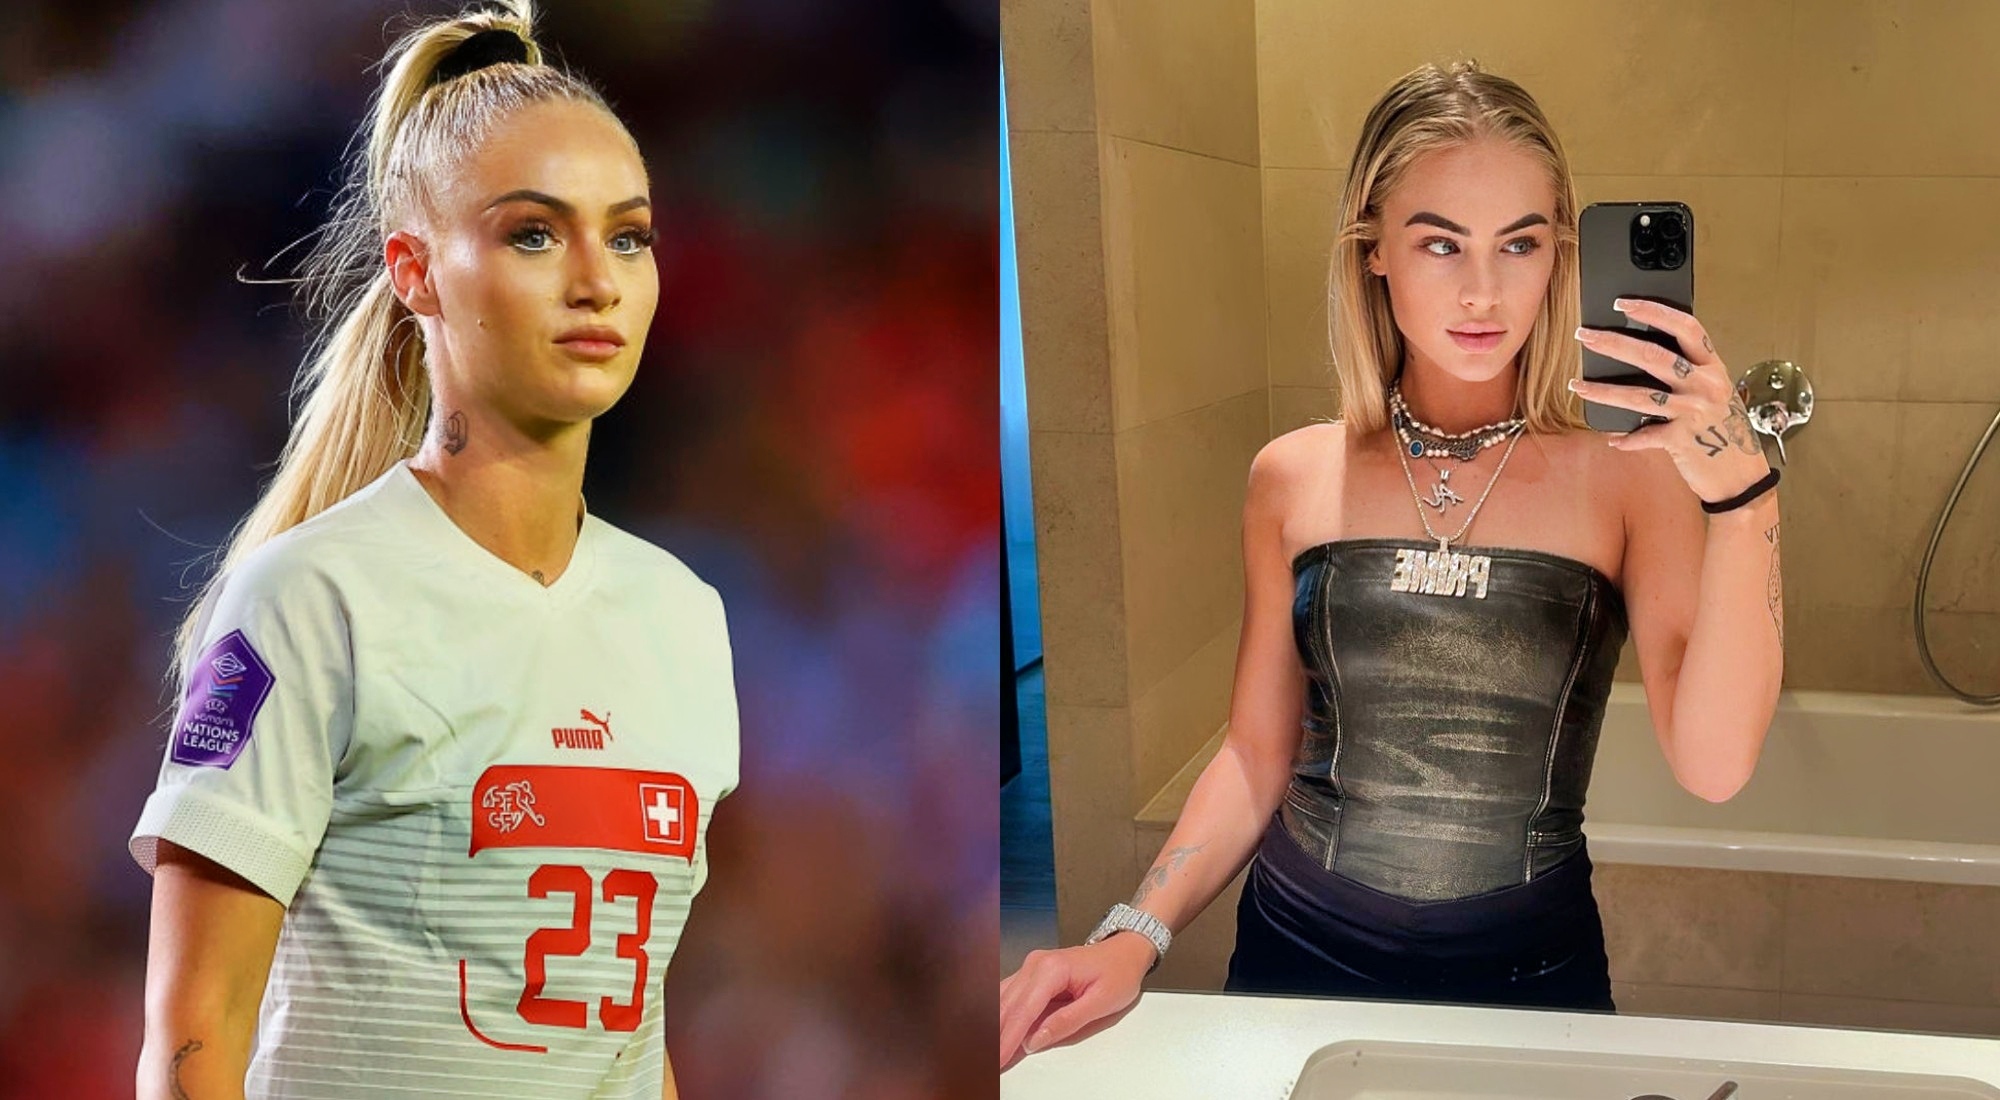 Swiss soccer star Alisha Lehmann in images